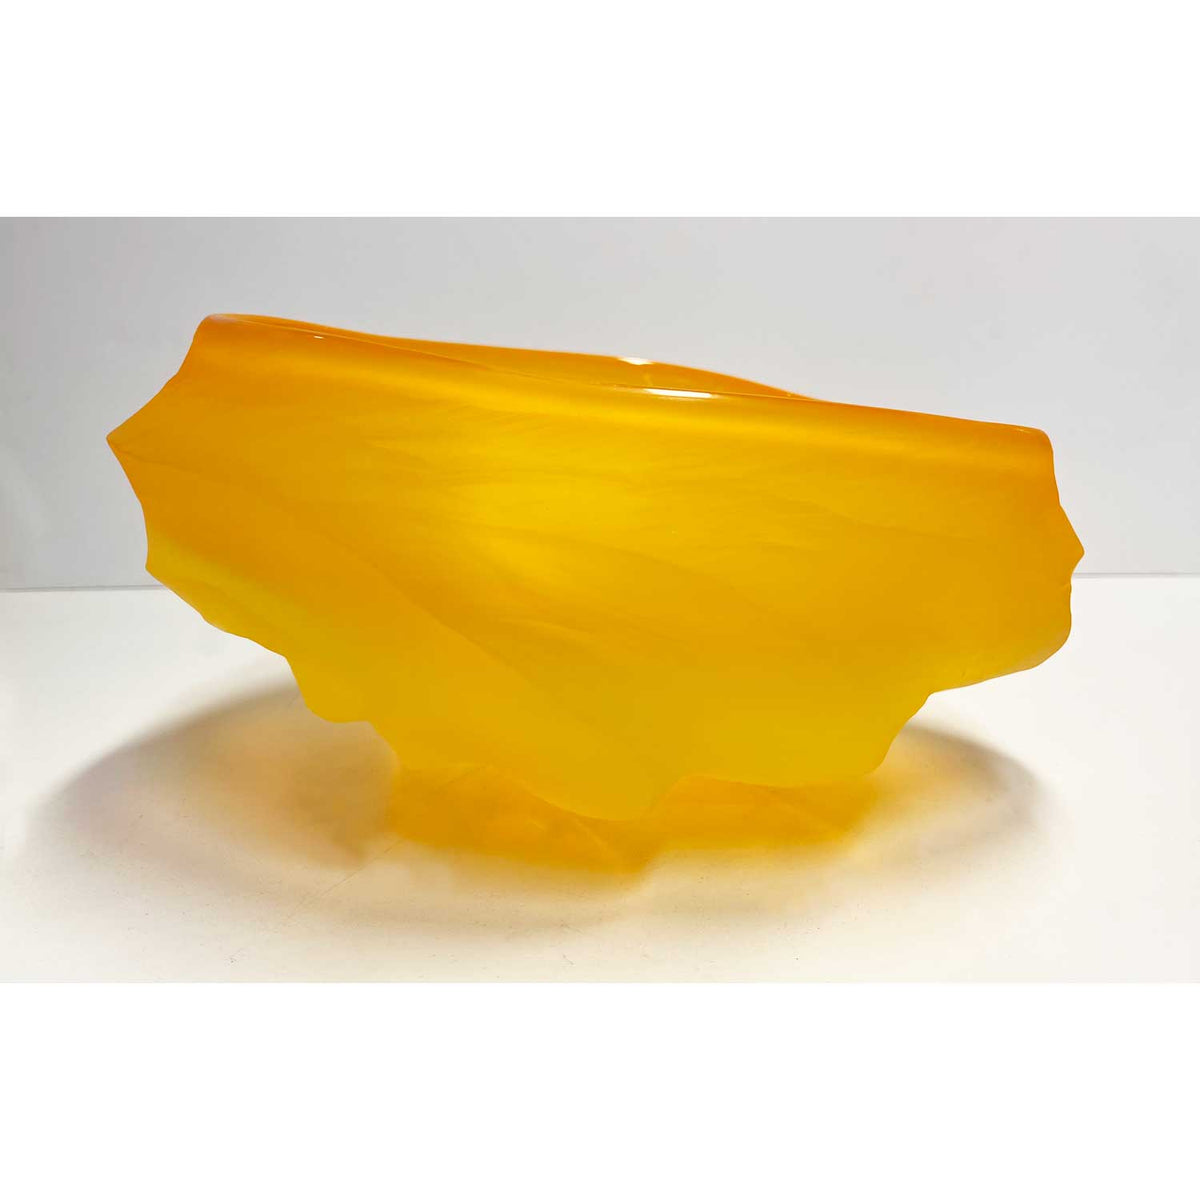 Brad Copping - Brilliant Yellow Undula Bowl, 6" x 10.5" x 9"